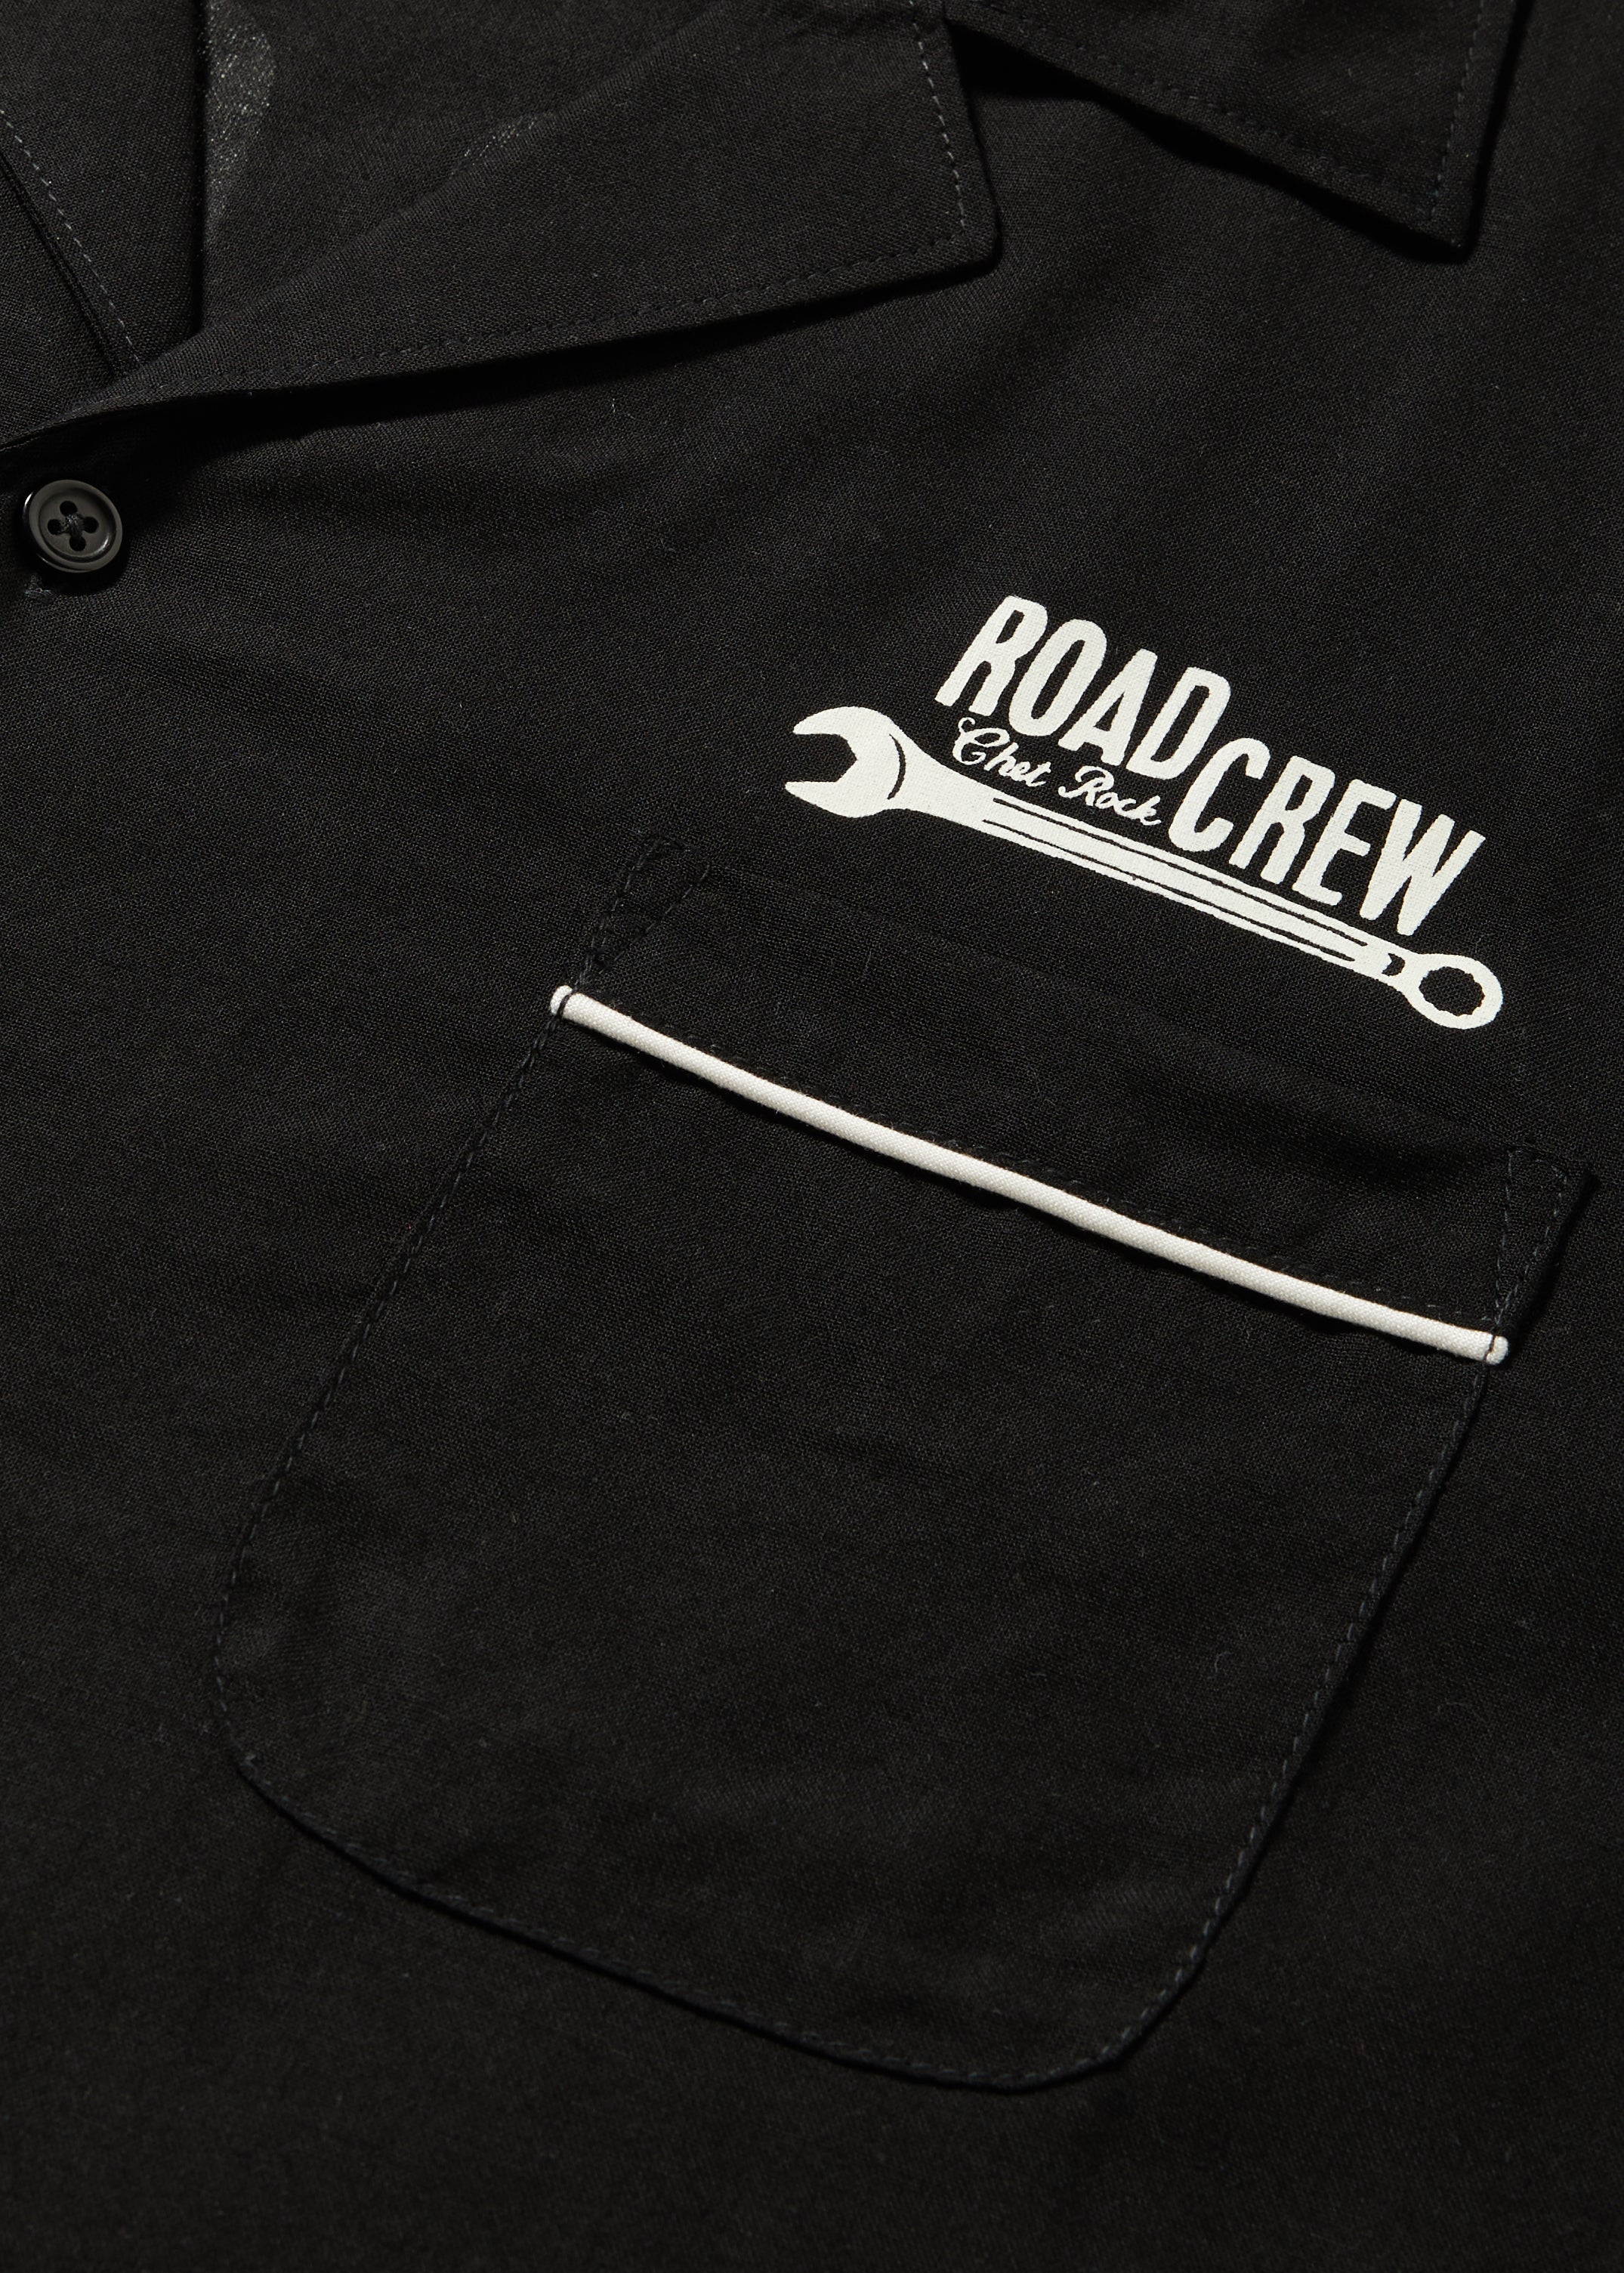 Roadcrew Shirt